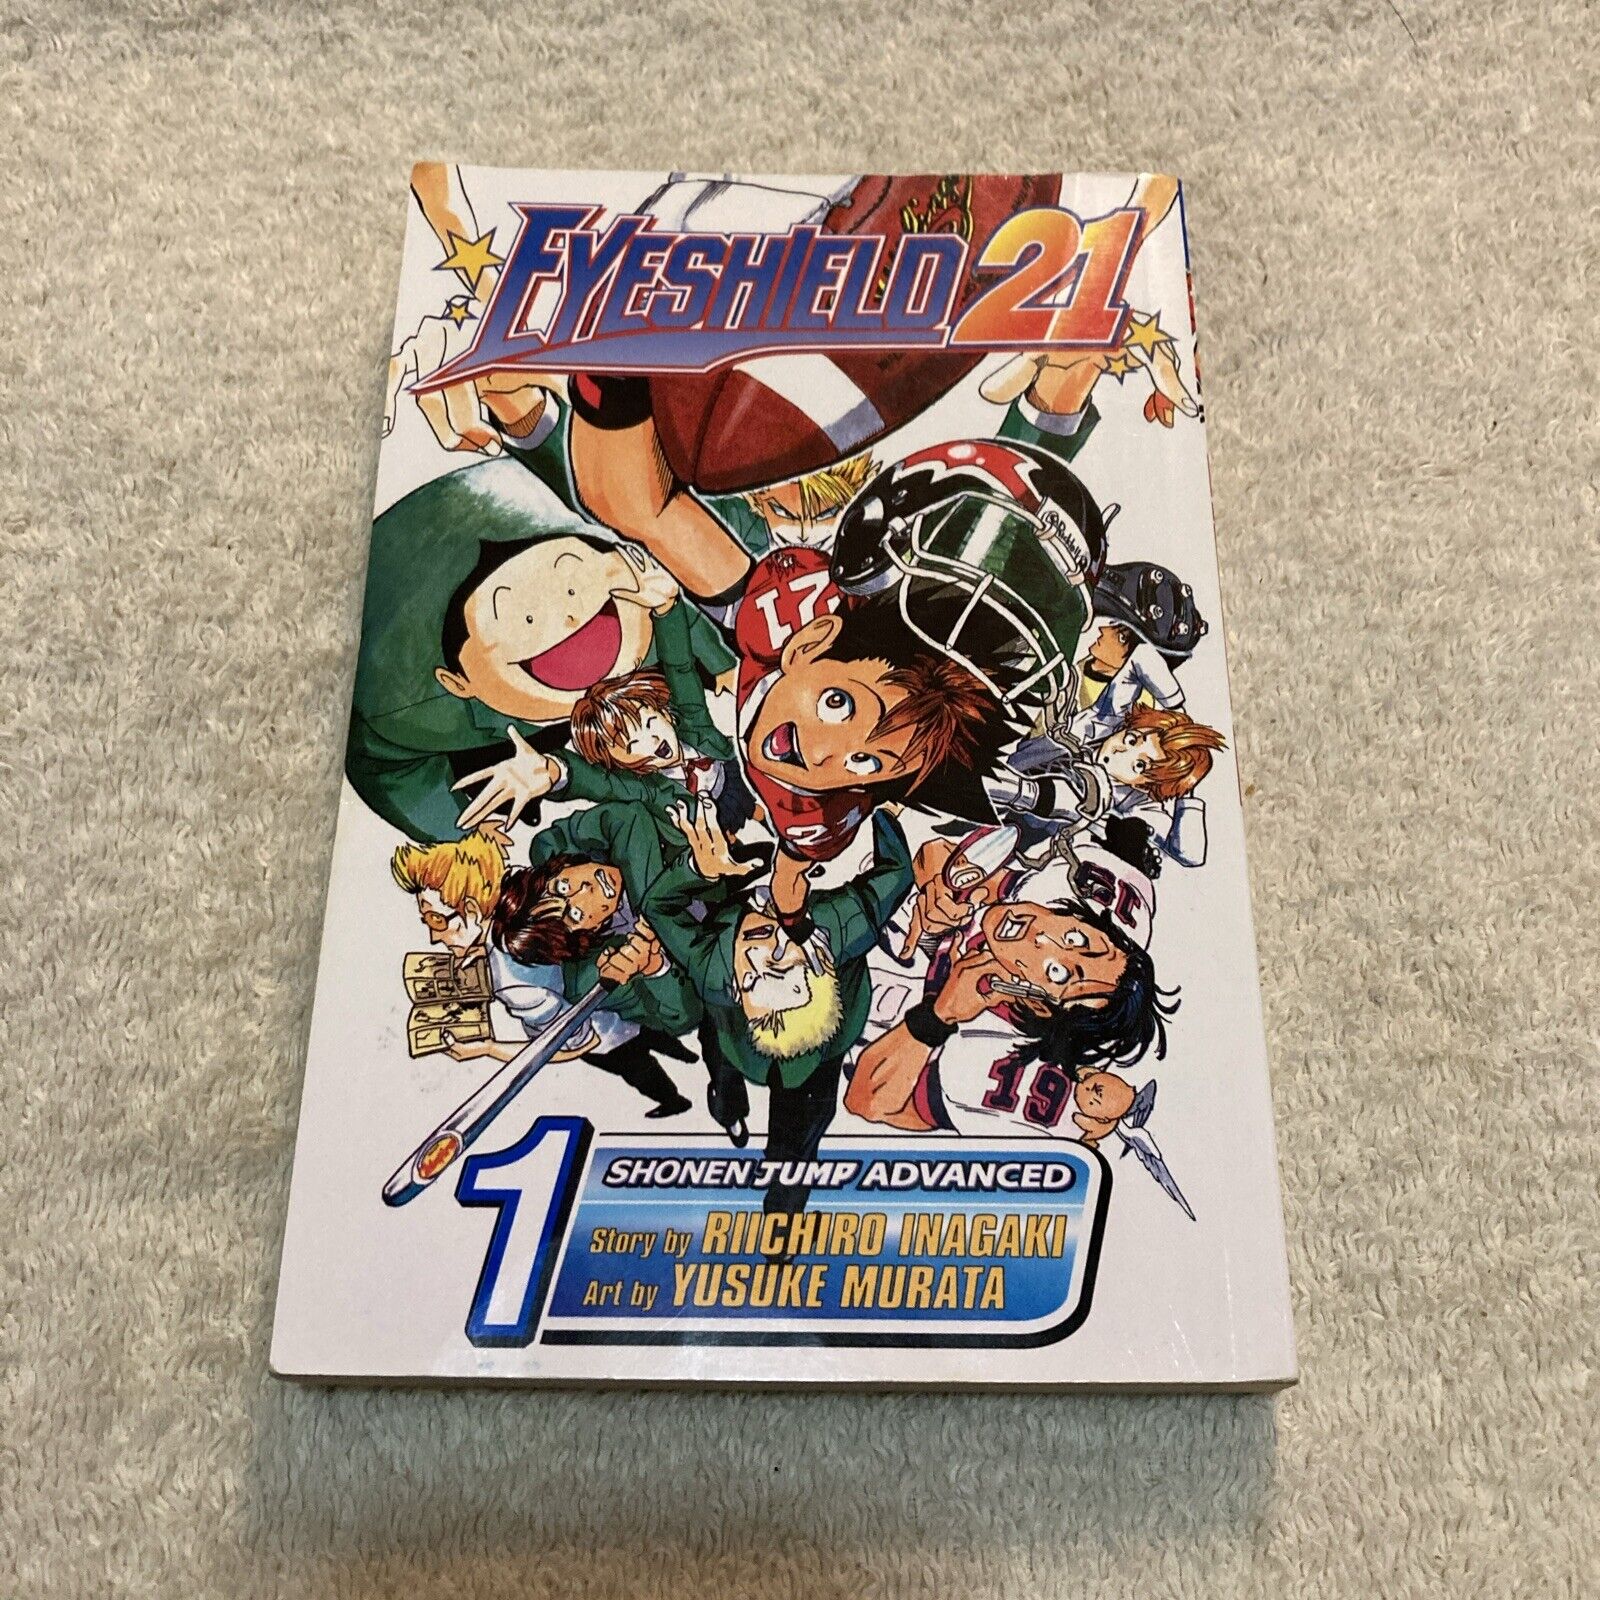 Eyeshield 21 Vol. 1 VIZ English Manga 1st Edition - 3rd Printing